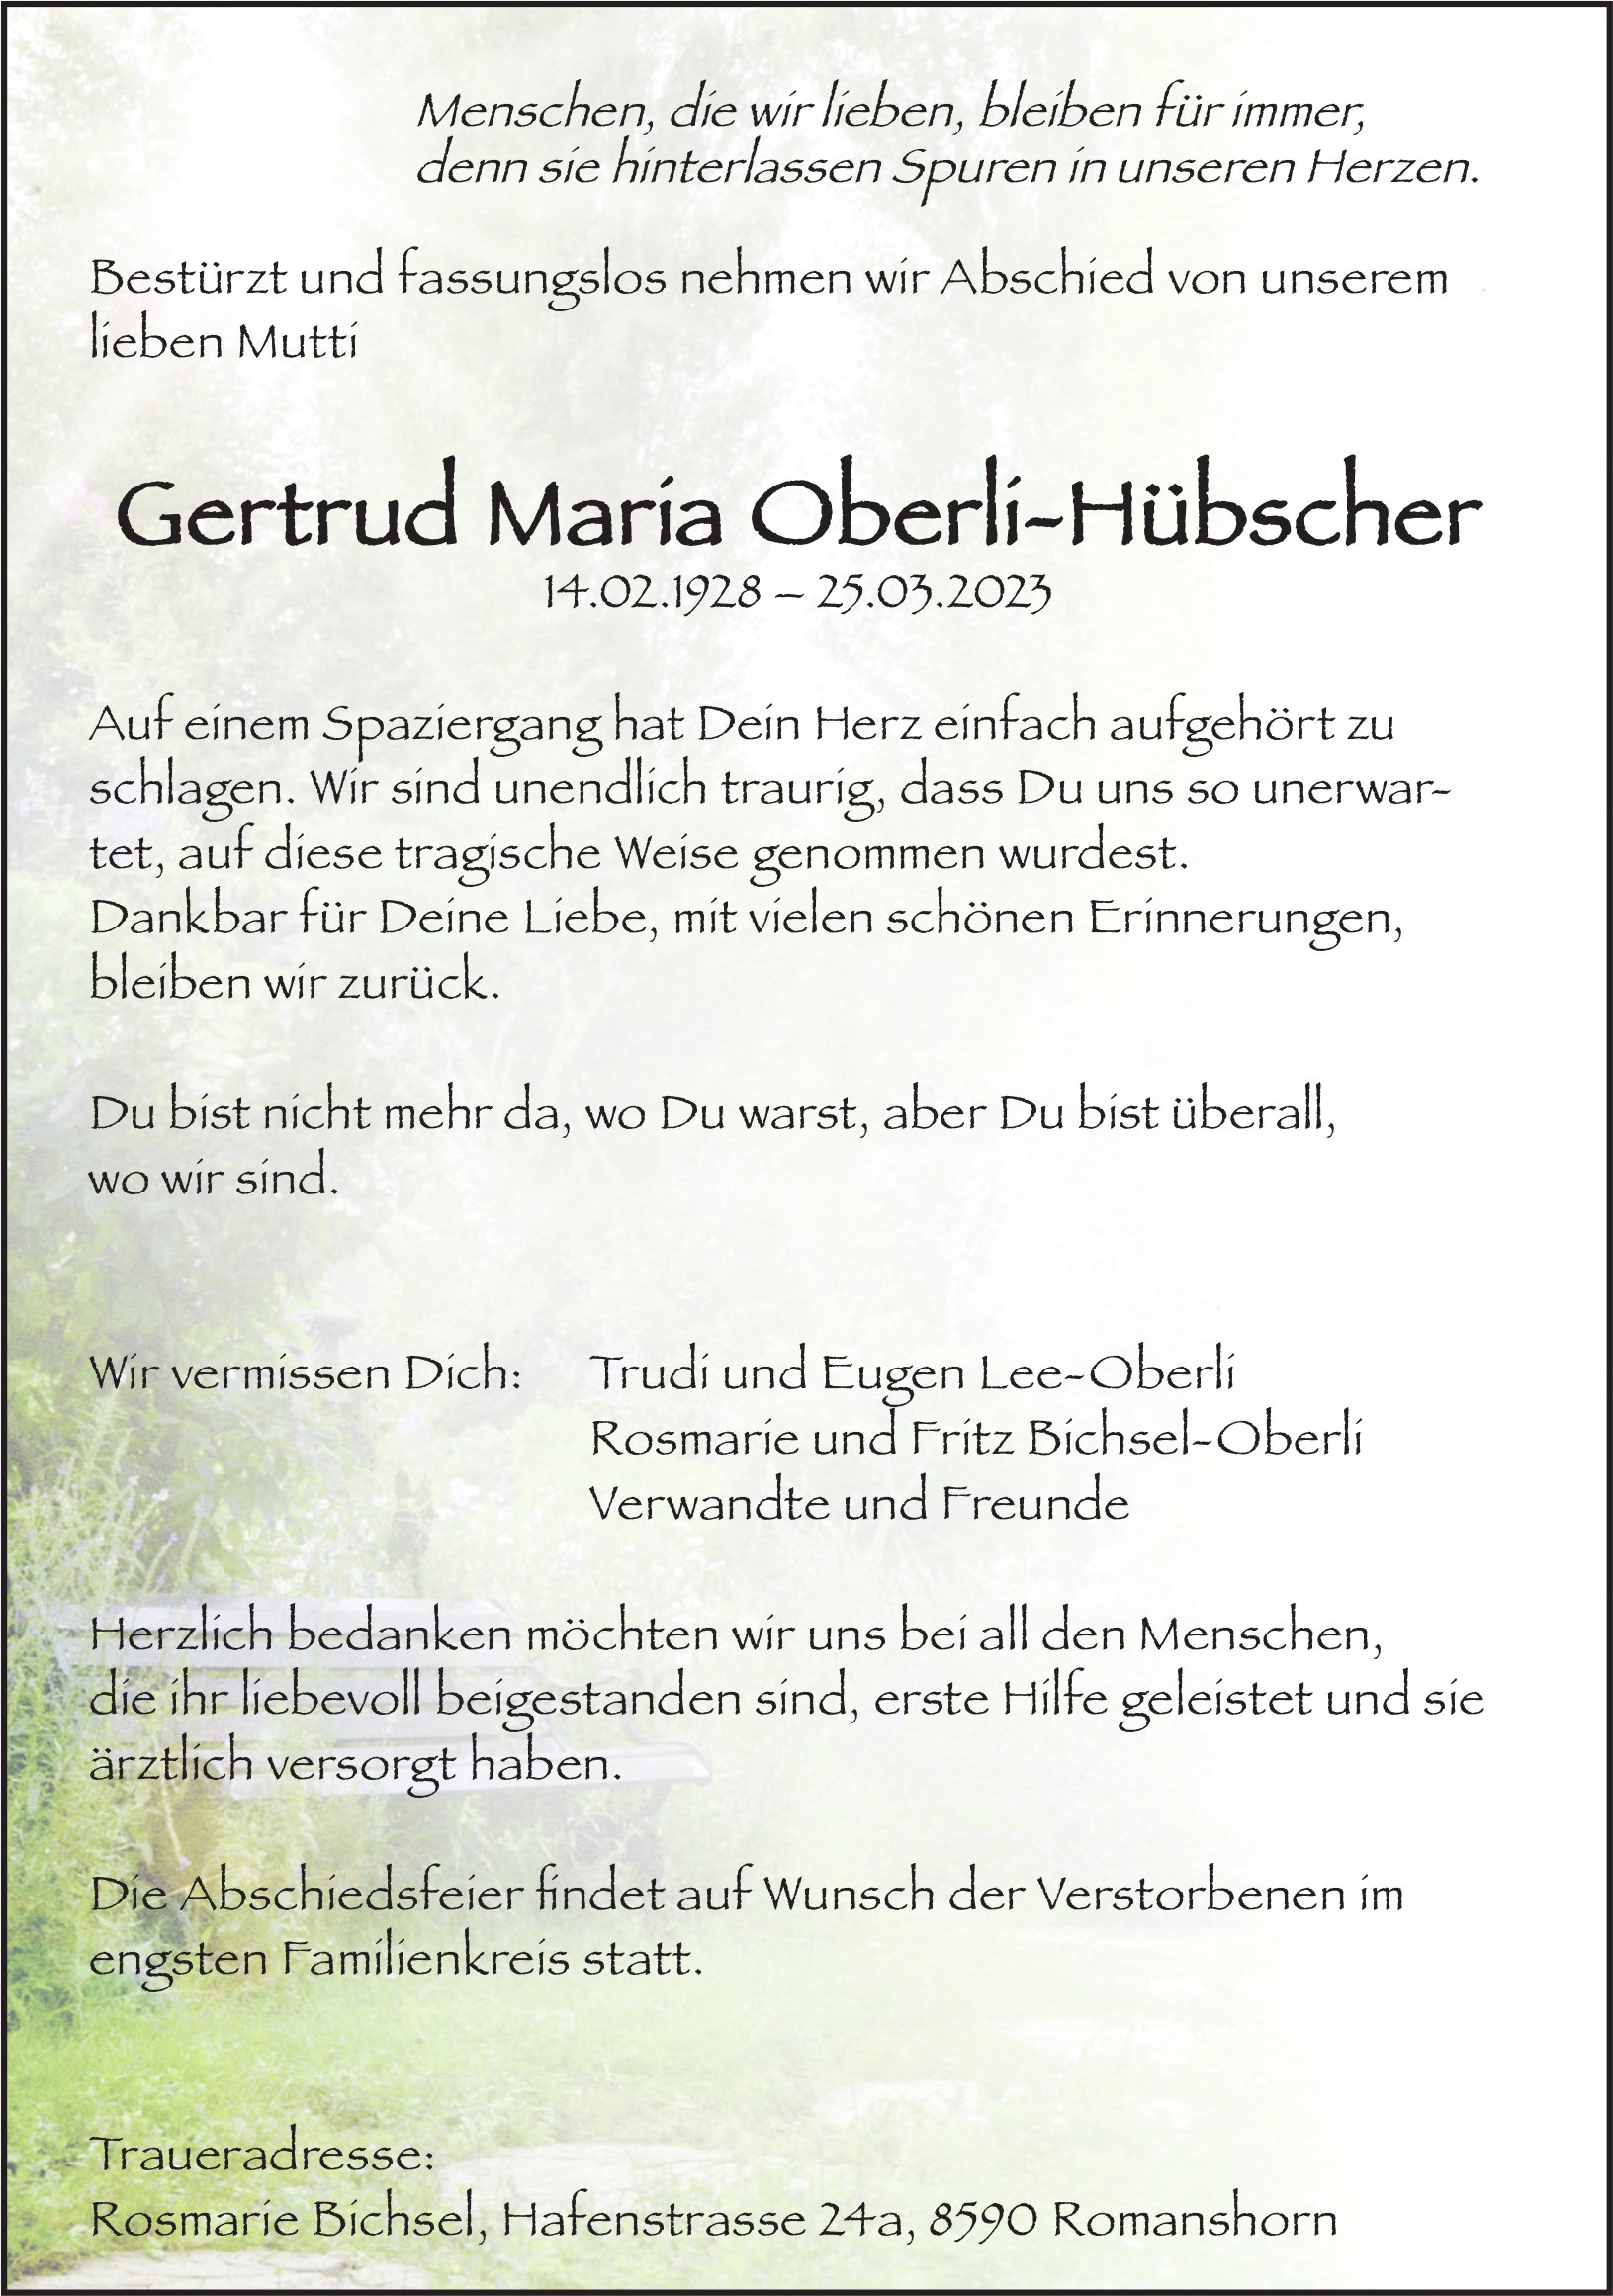 Oberli-Hübscher Gertrud Maria, März 2023 / TA